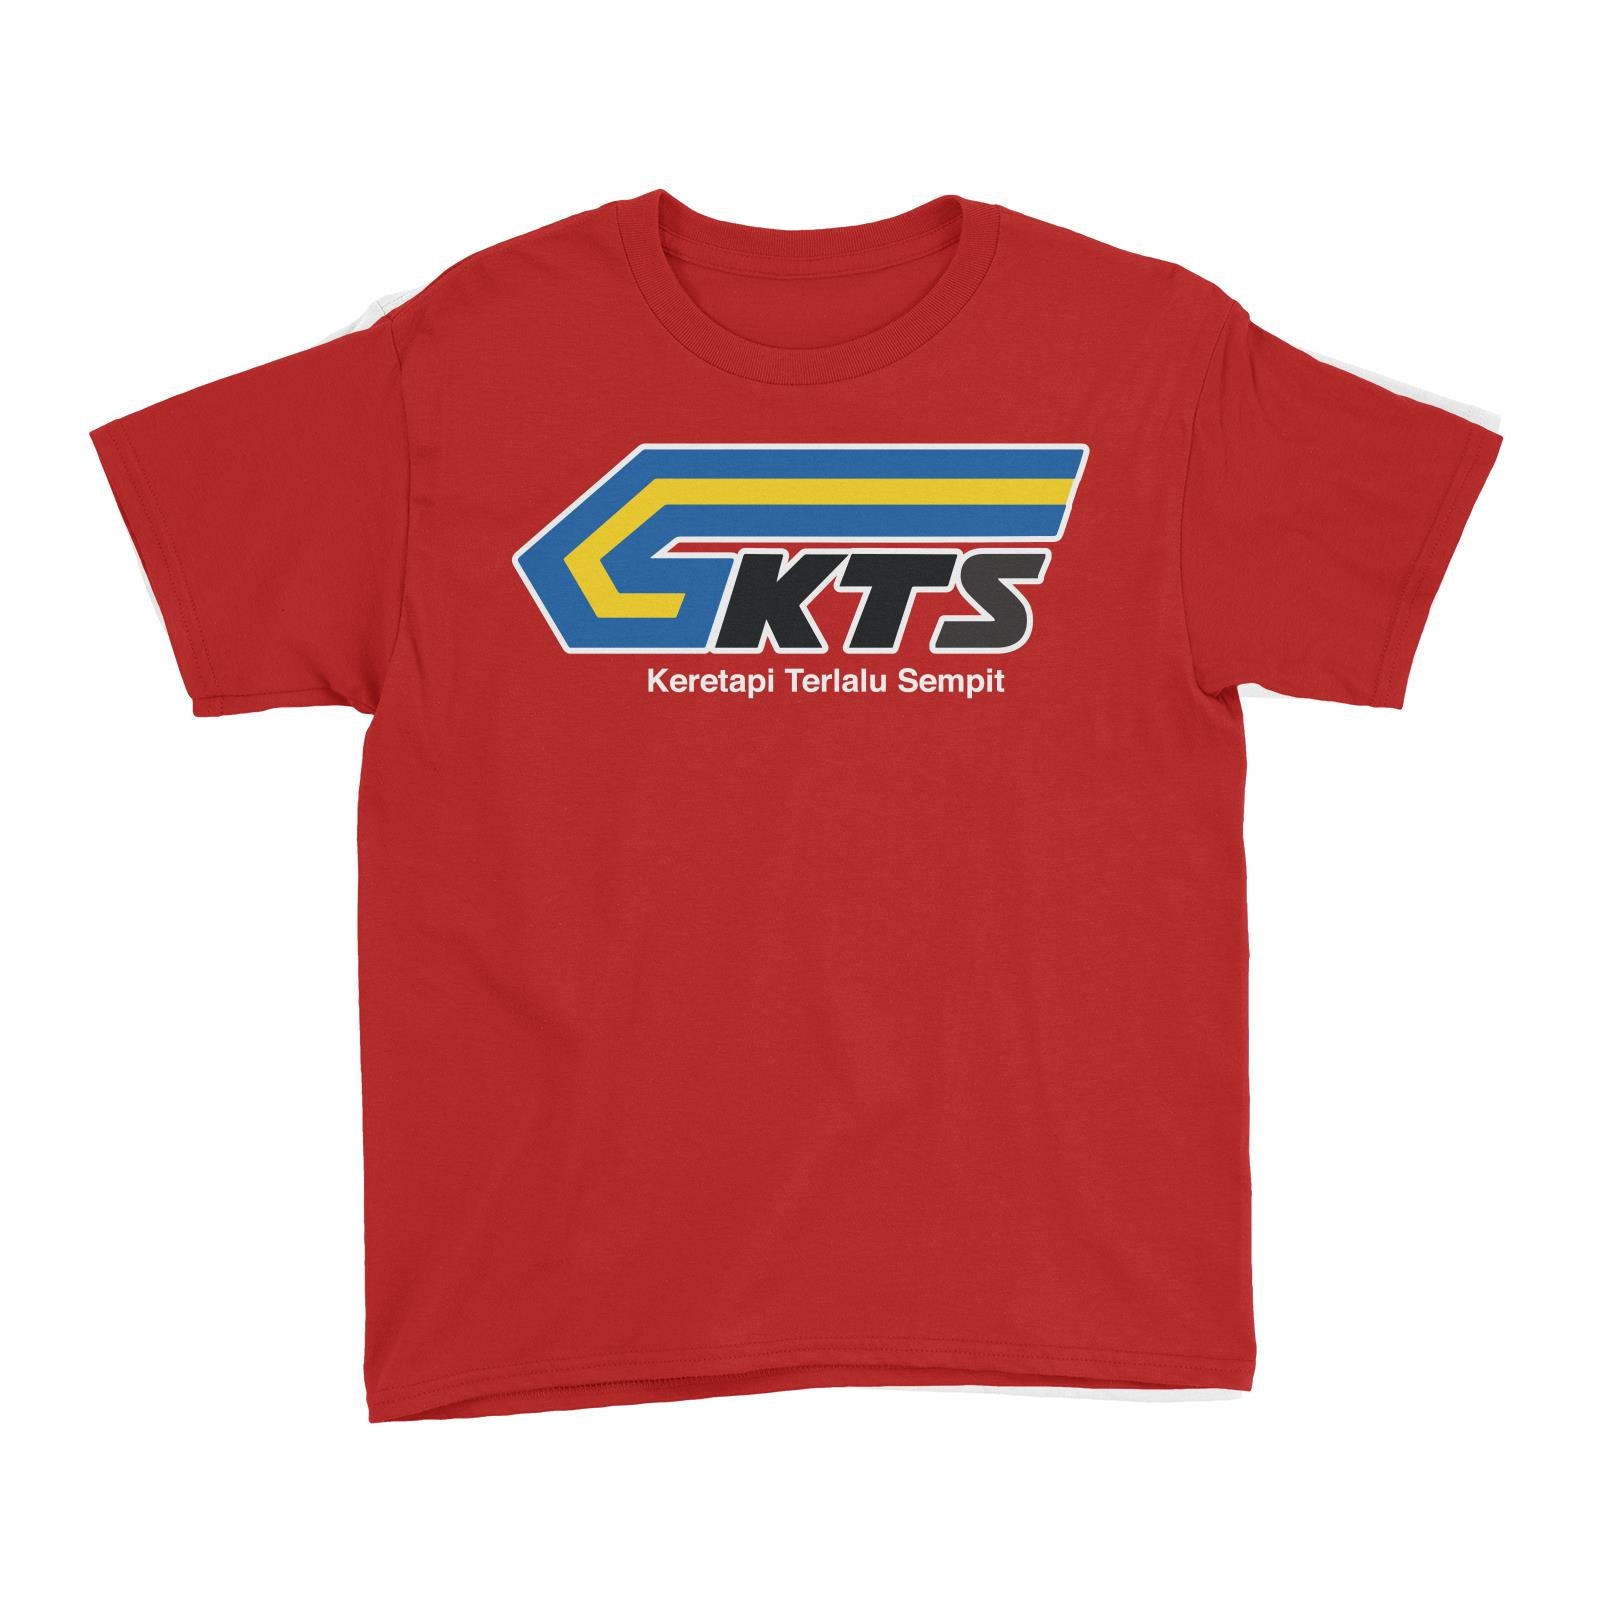 Slang Statement KTS Kid's T-Shirt